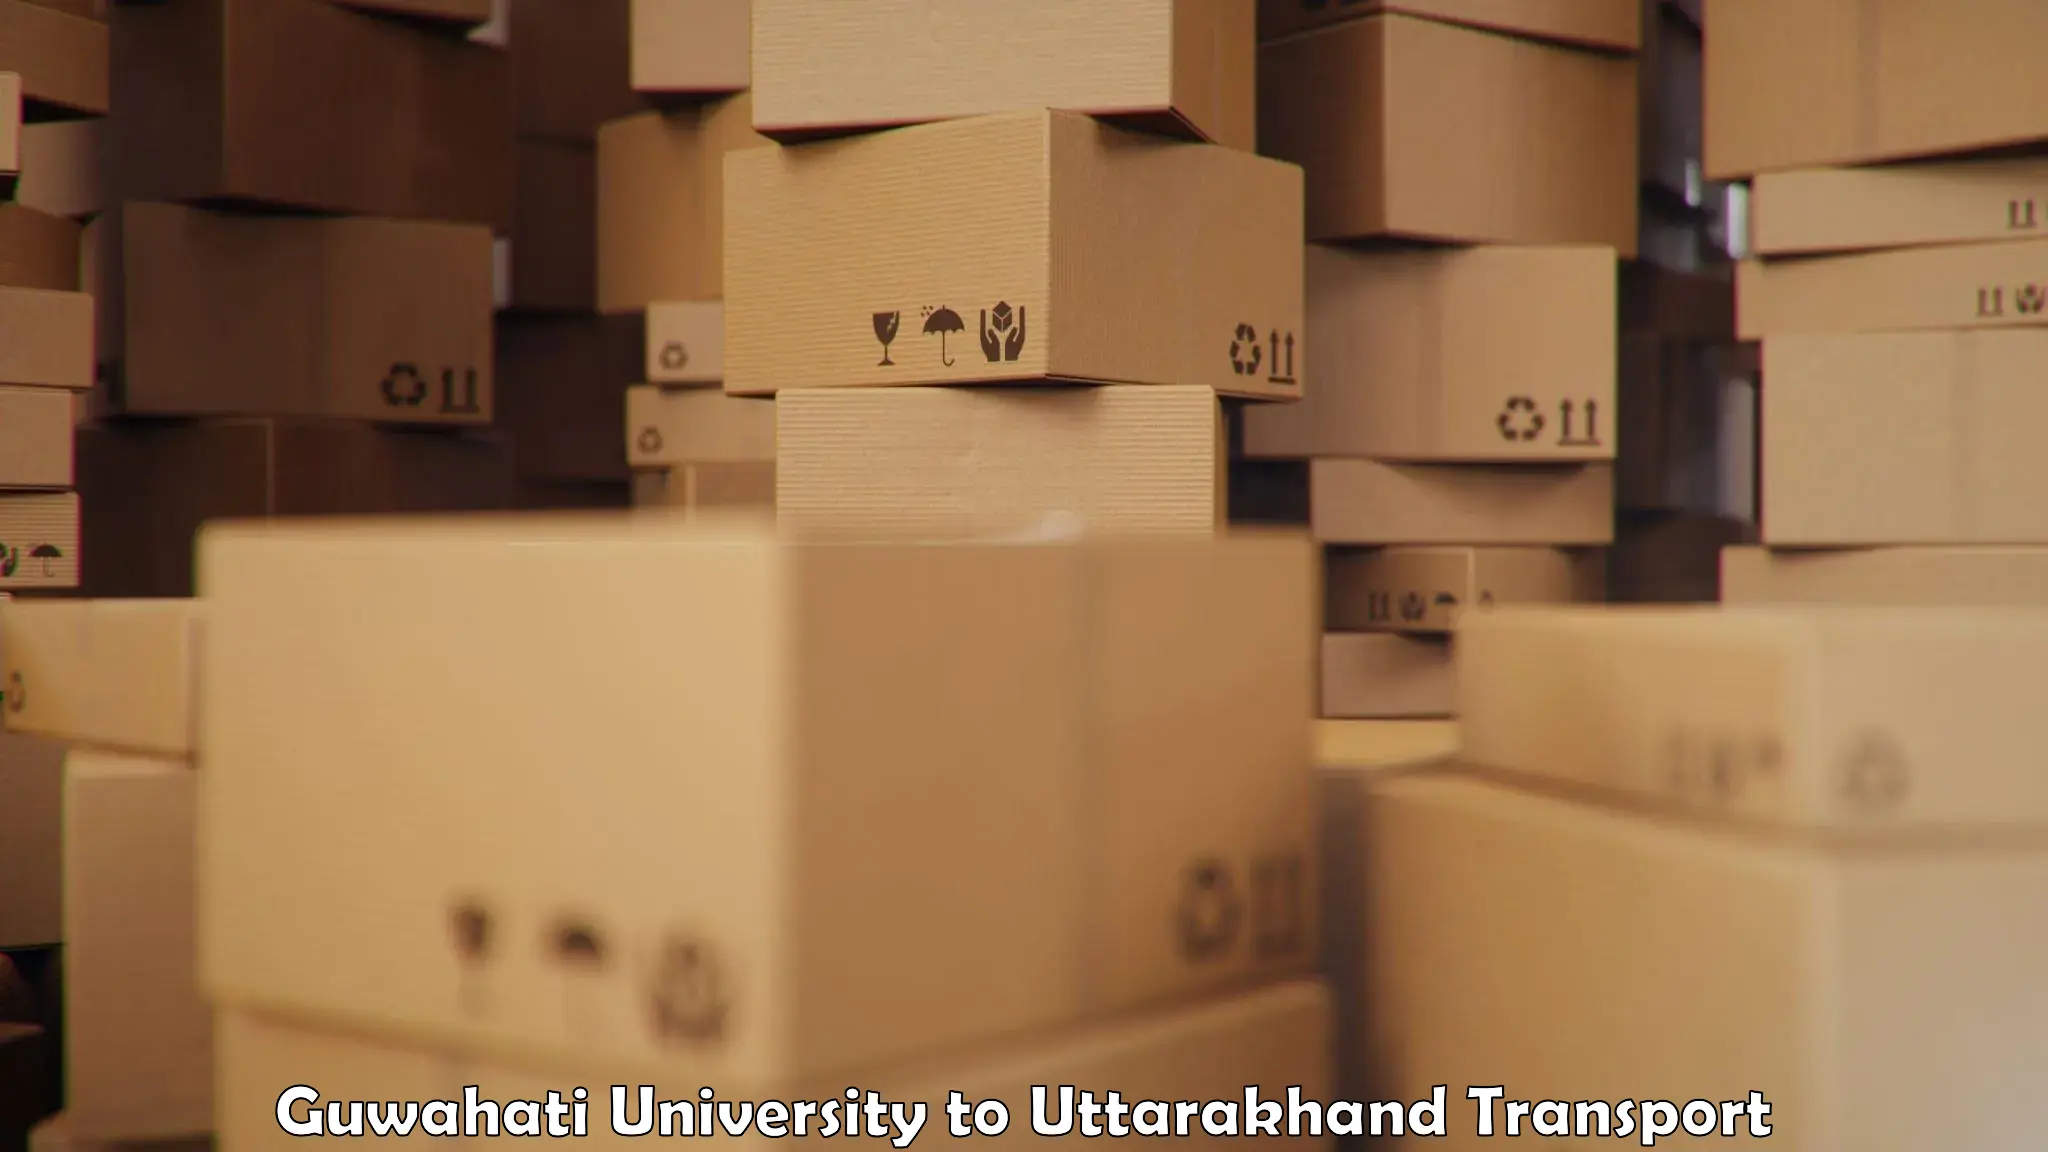 Furniture transport service Guwahati University to Uttarakhand